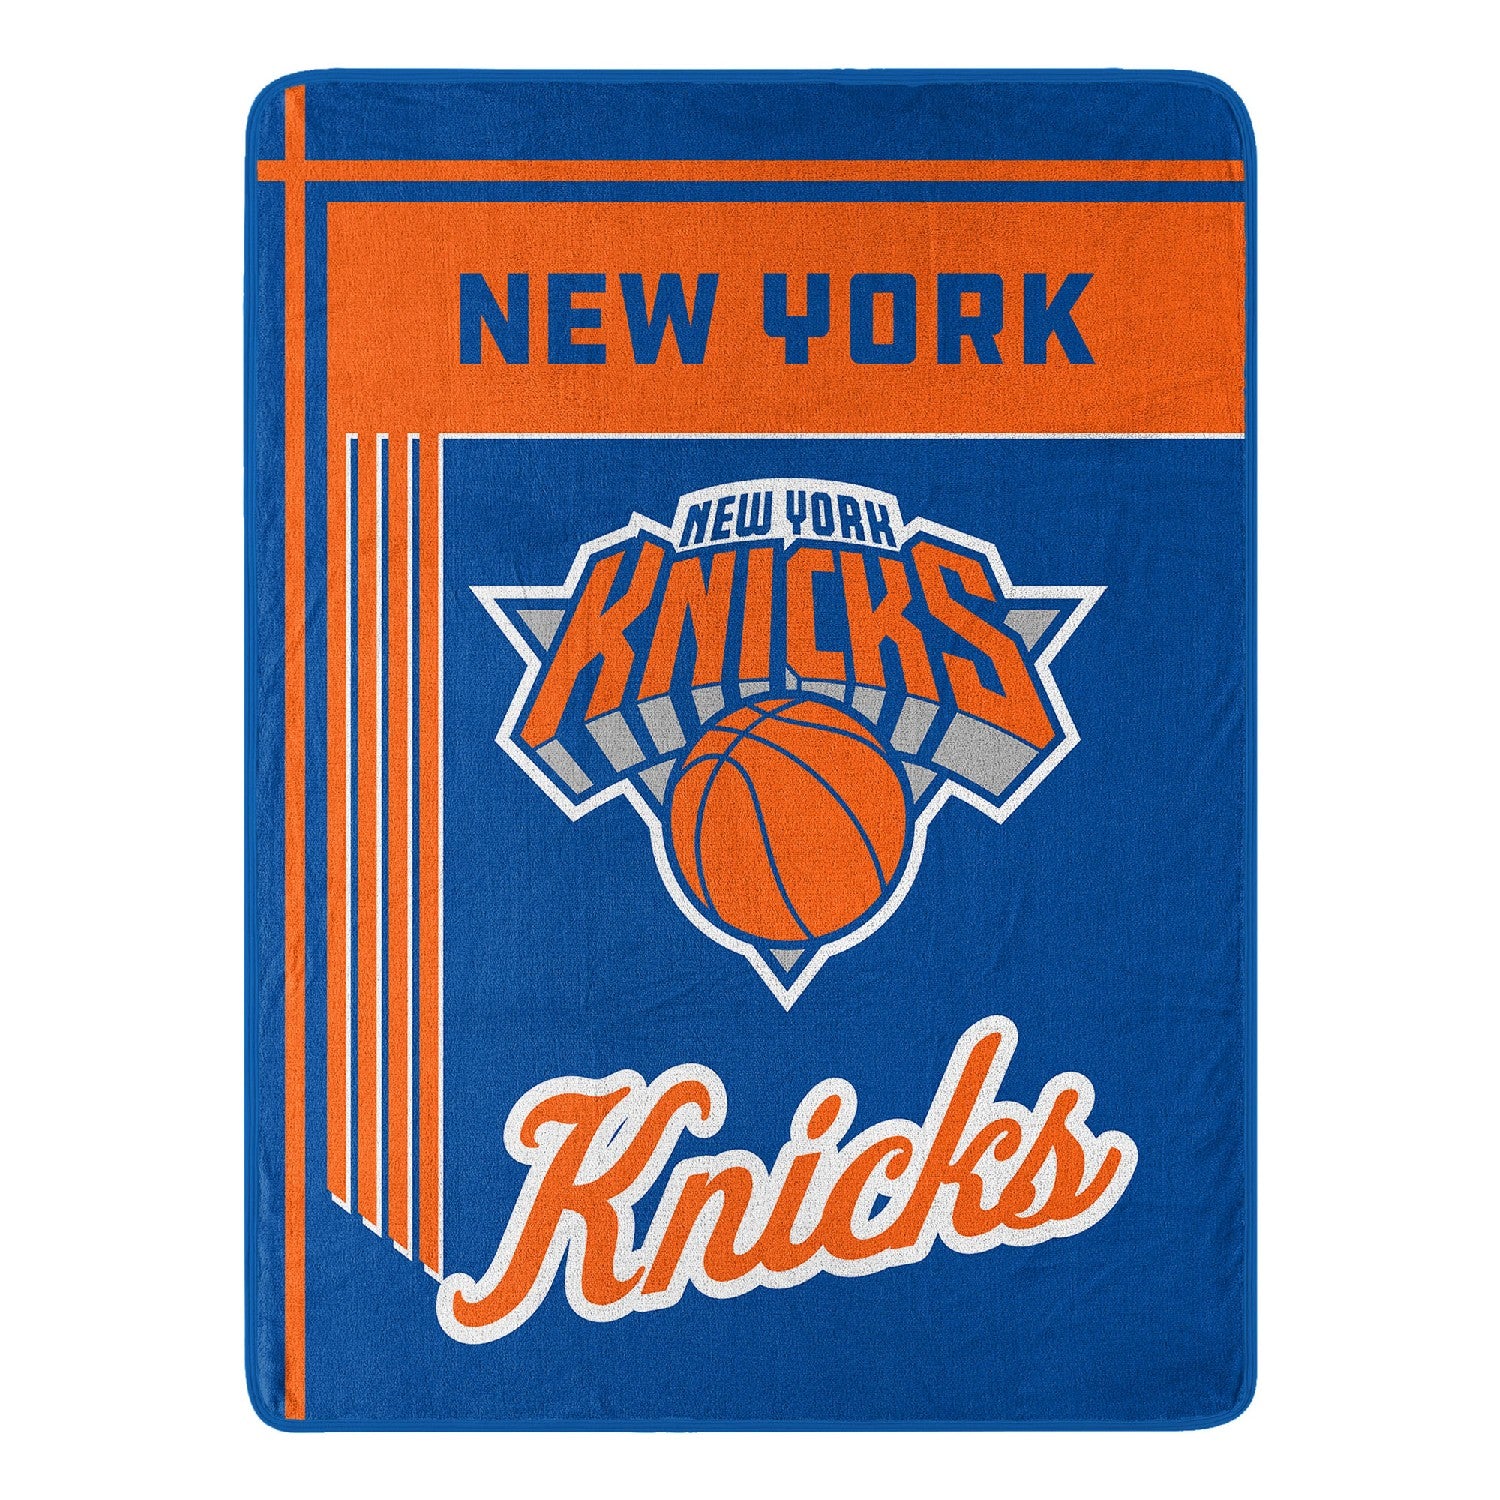 New York Knicks NBA Officially Licensed Throw Blanket 46x60